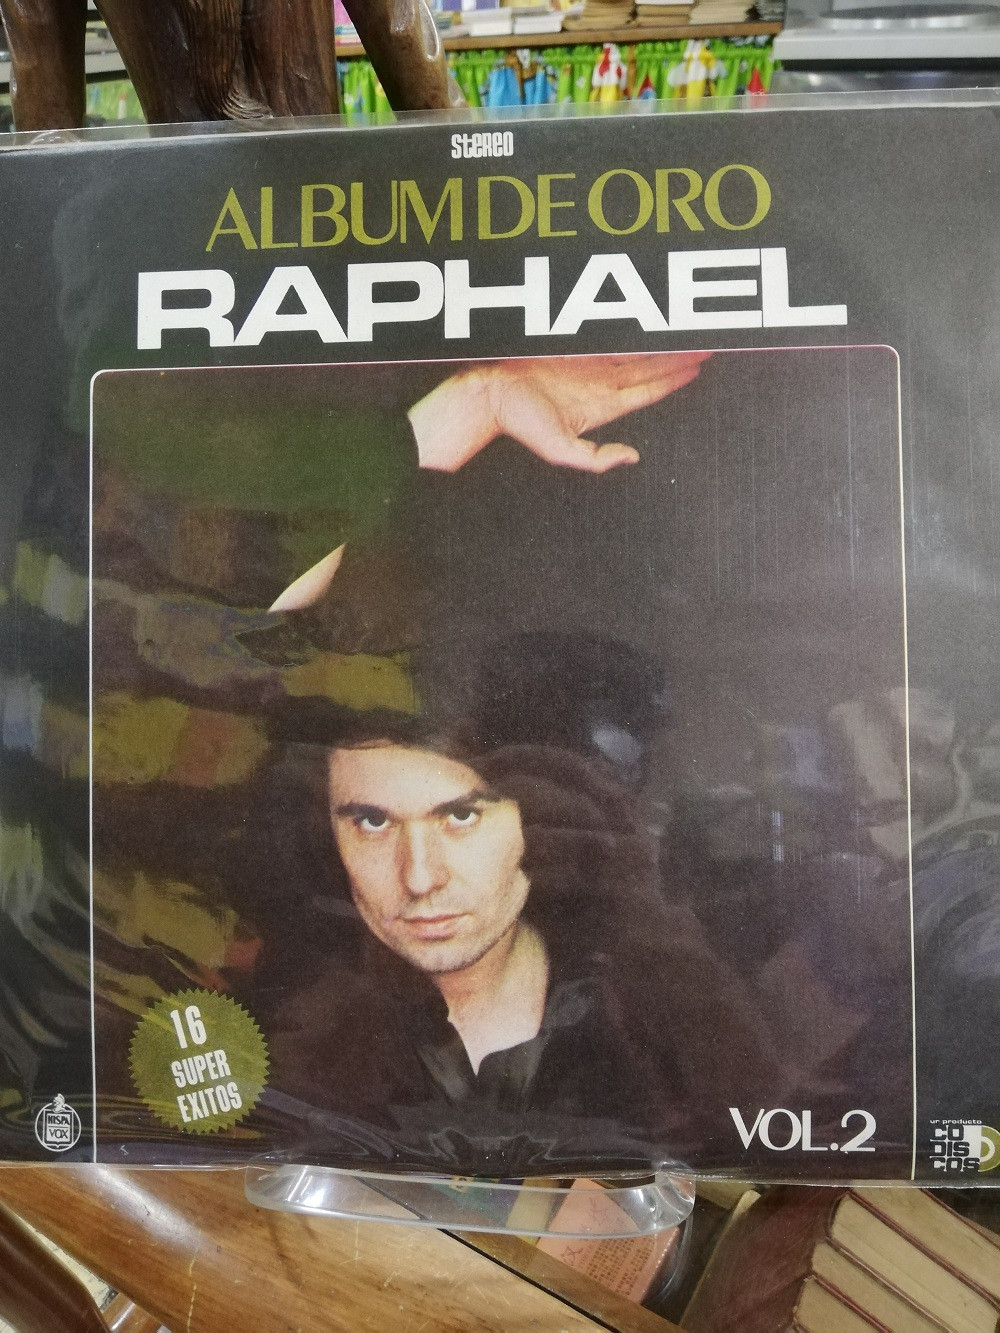 Imagen LP RAPHAEL - ALBUM DE ORO VOL. 2